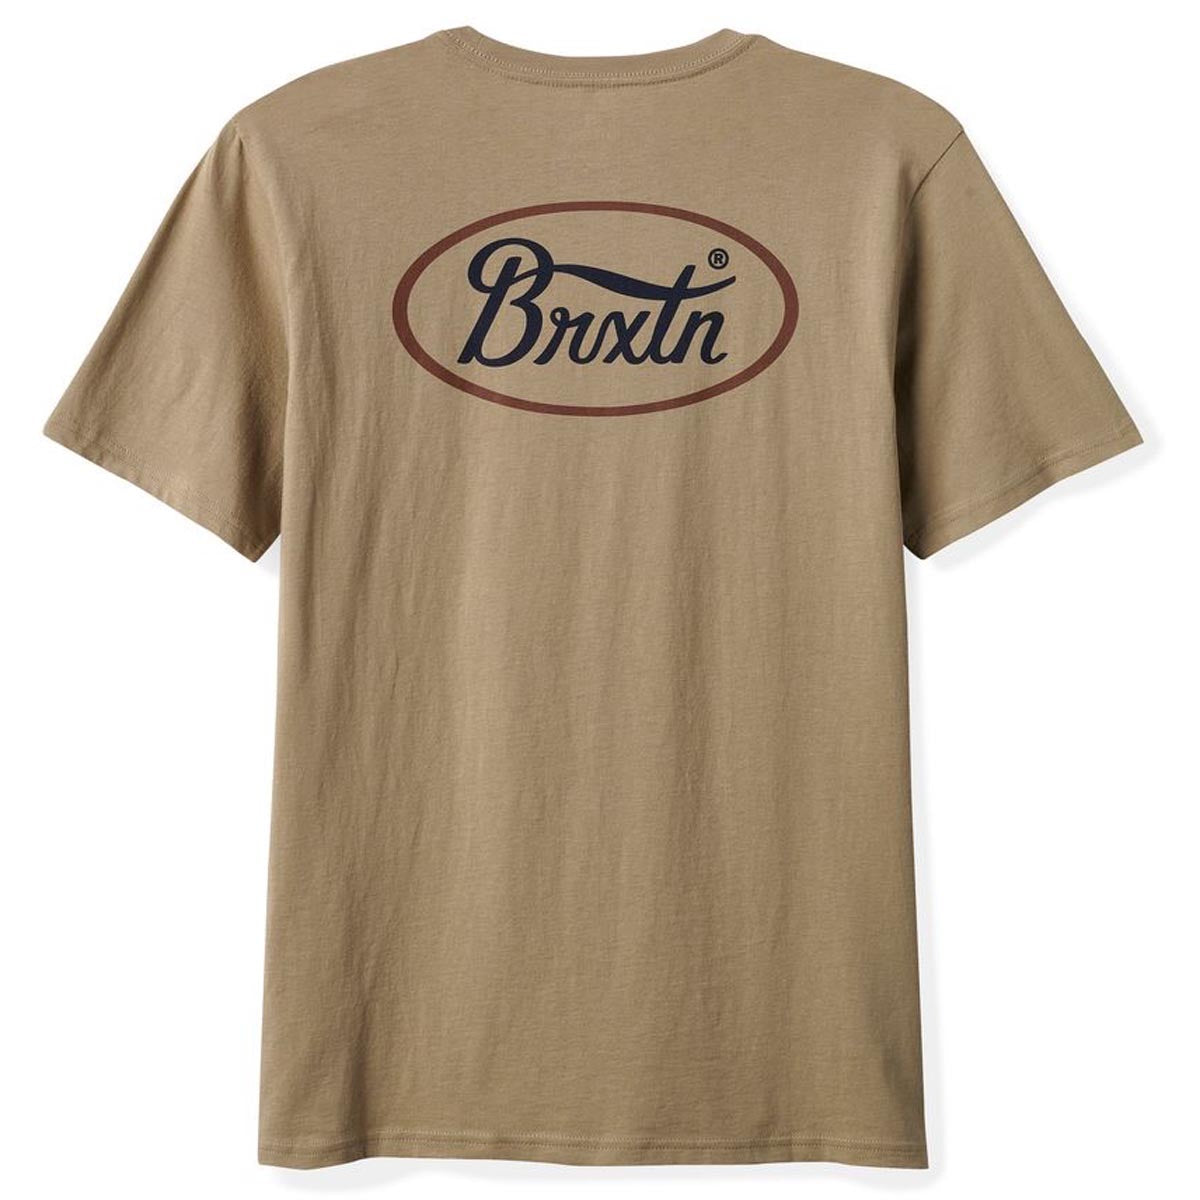 Brixton Parsons T-Shirt - Oatmeal/Washed Navy/Sepia image 2